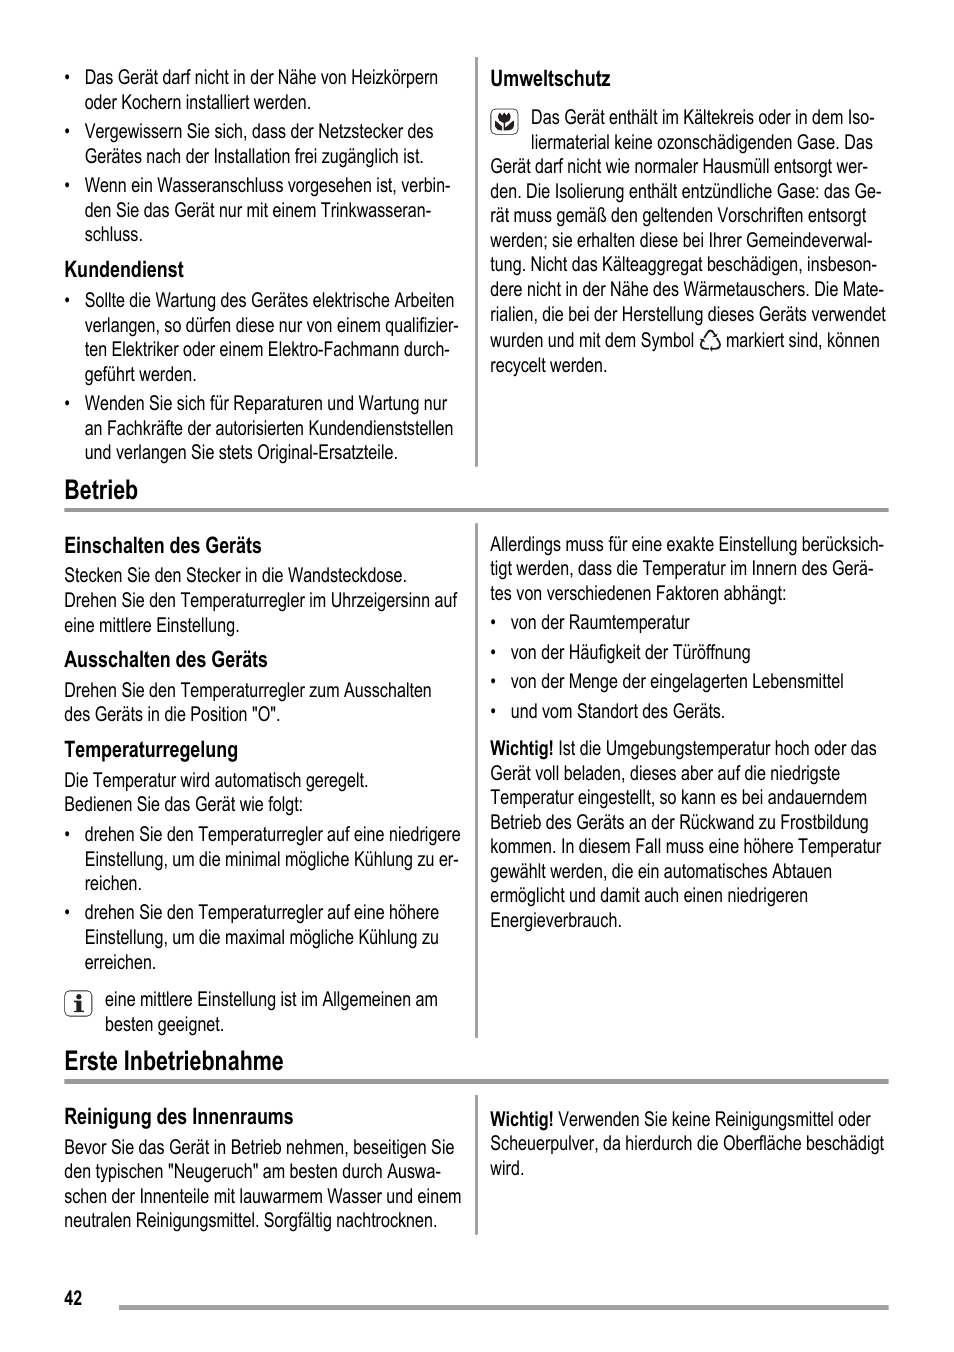 Betrieb, Erste inbetriebnahme | ZANKER KBB 24001 SK User Manual | Page 42 / 56